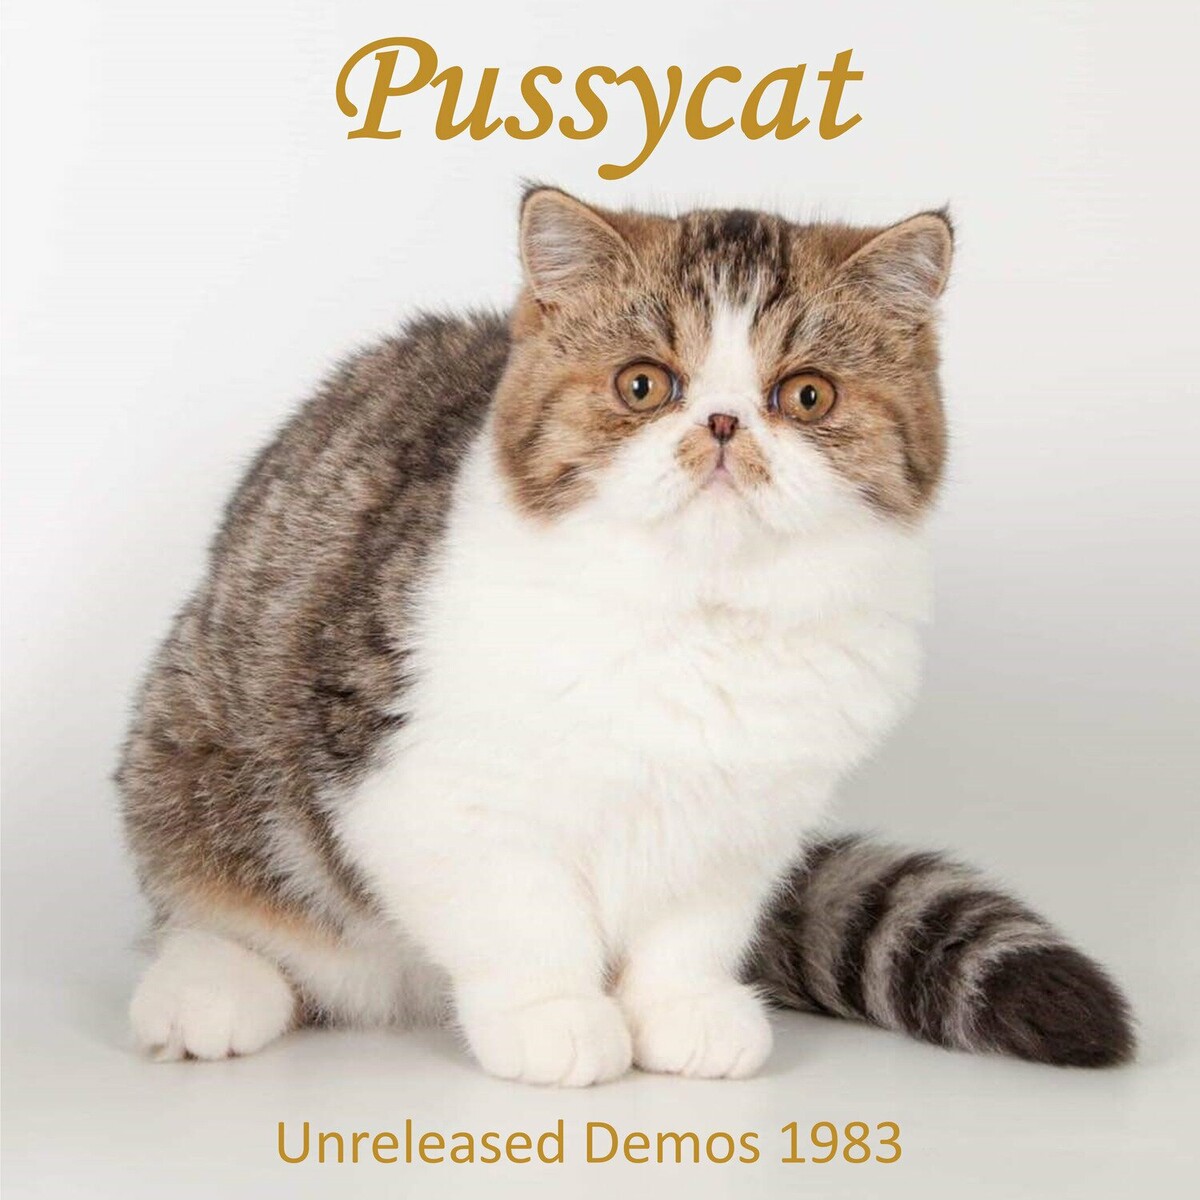 Pussycat - Unreleased Demos 1983